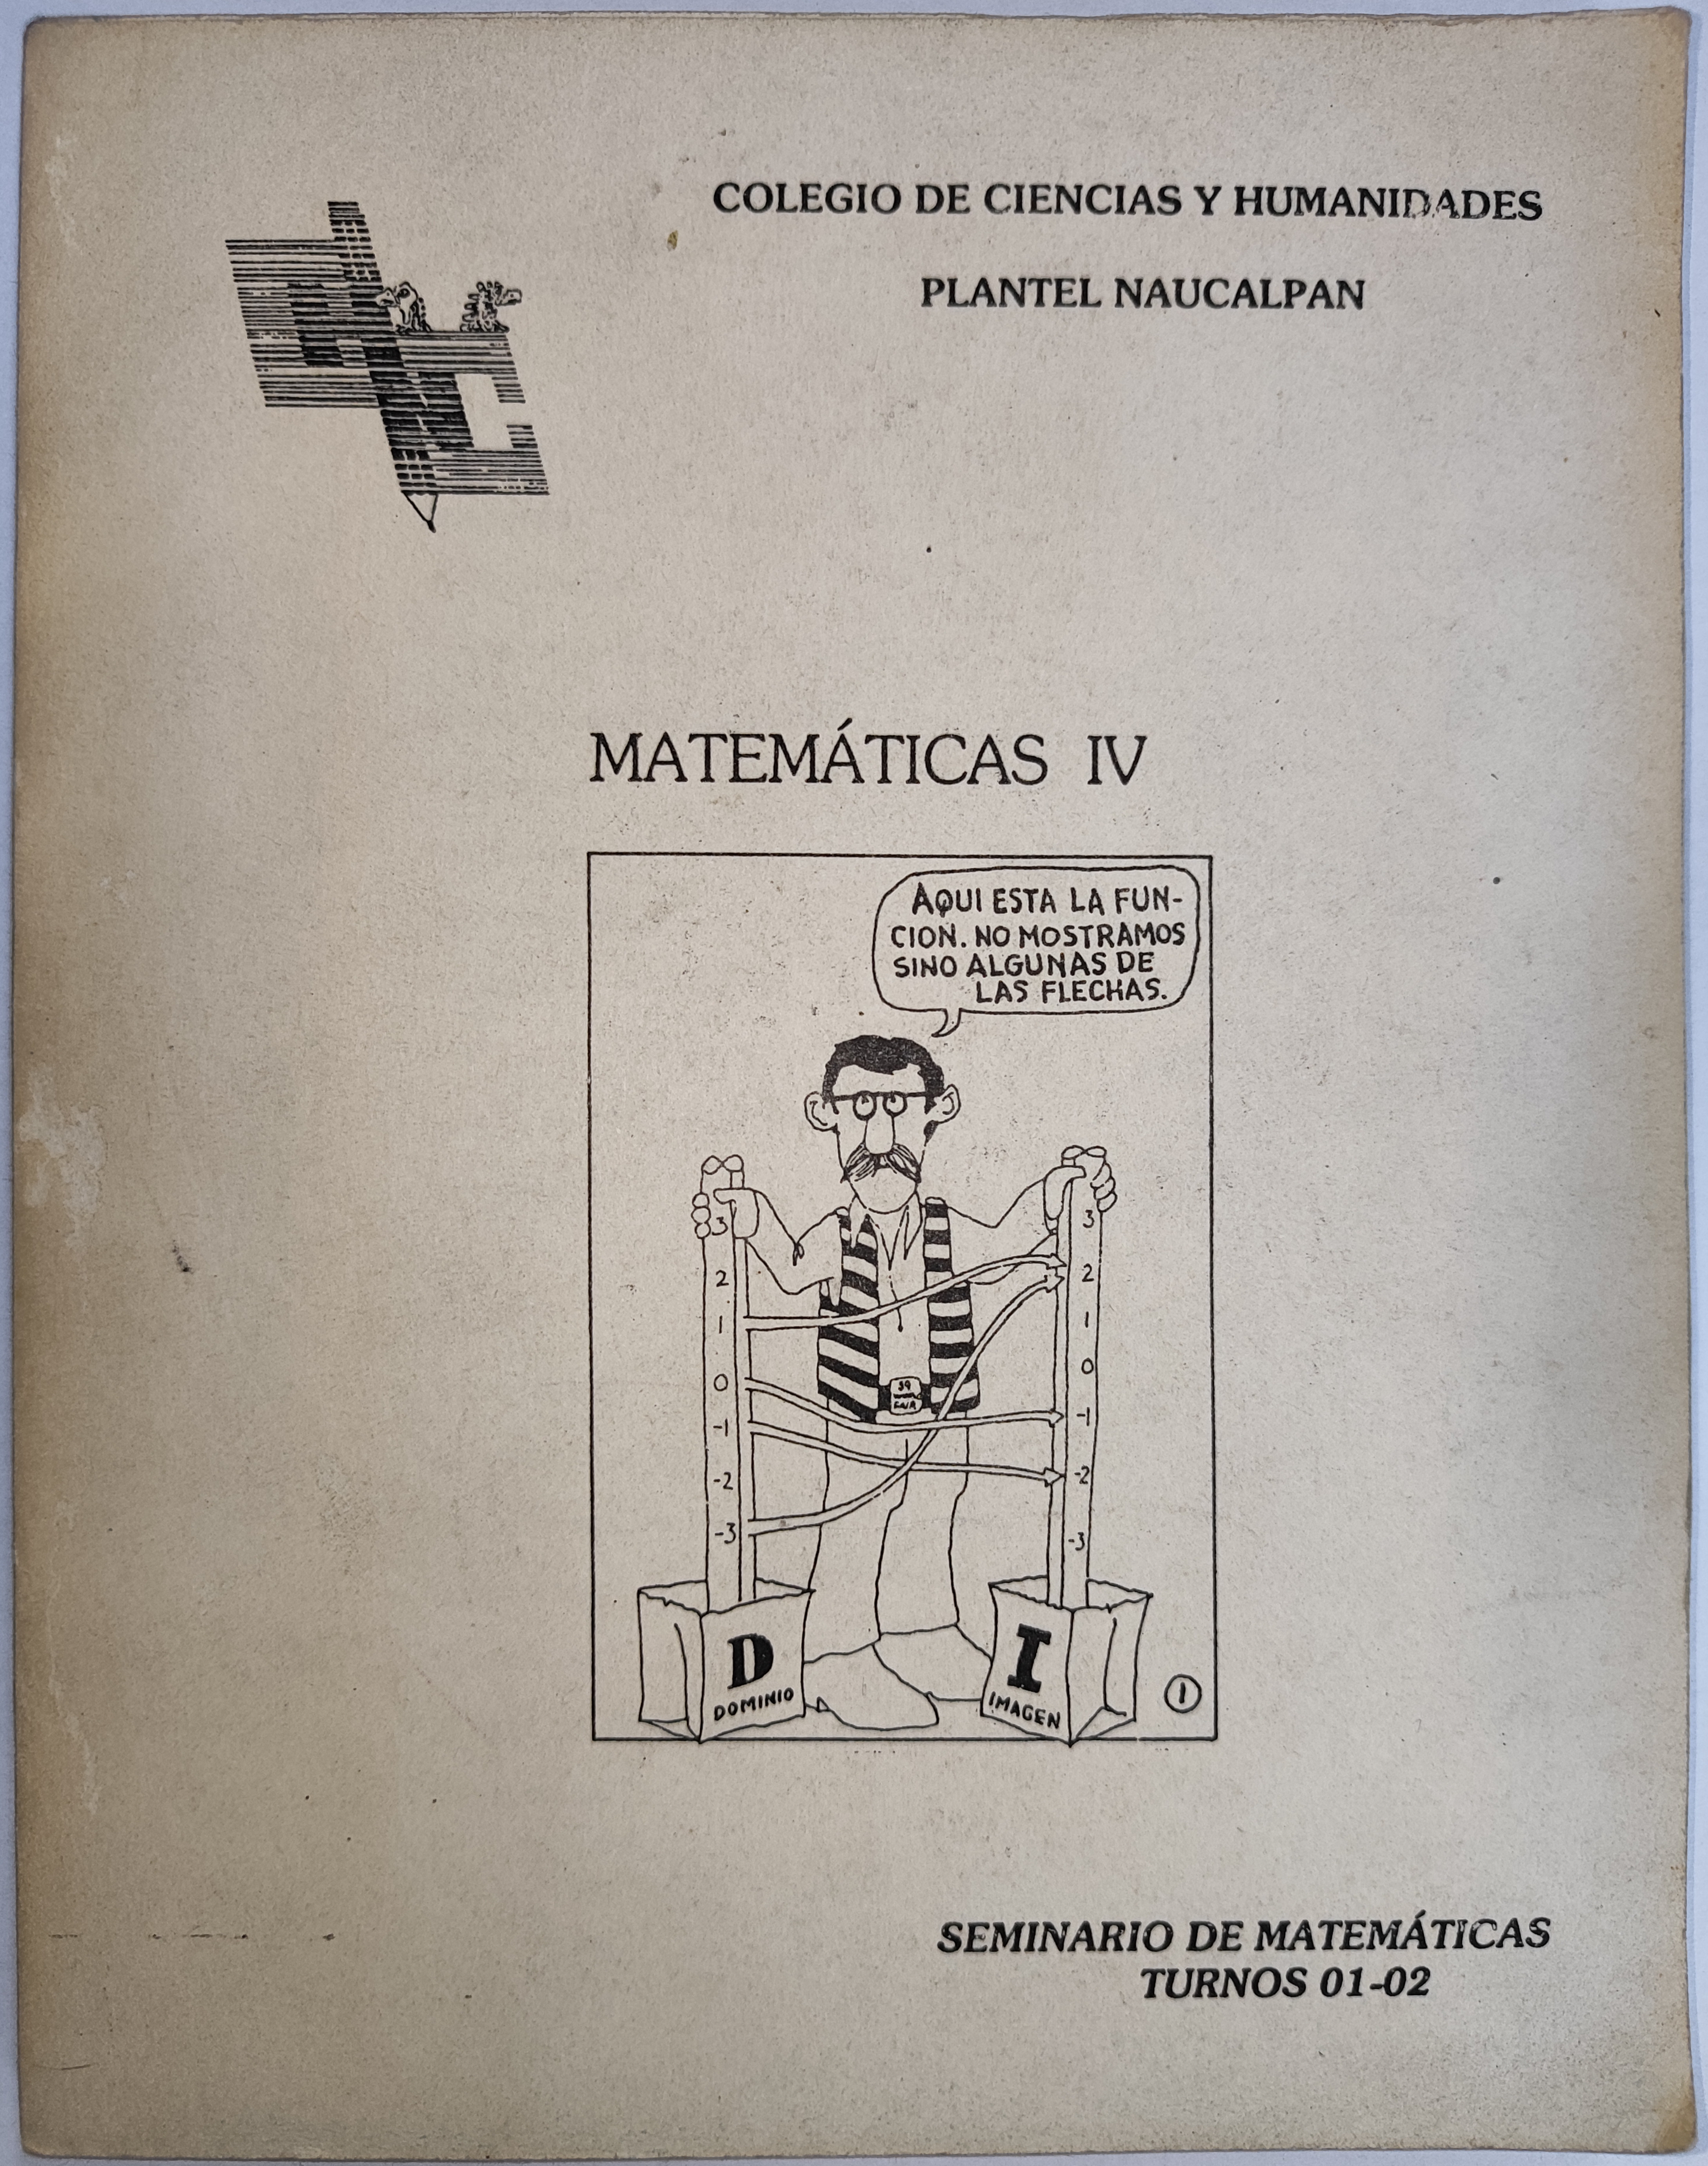 Material de apoyo para la asignatura de Matemáticas IV.